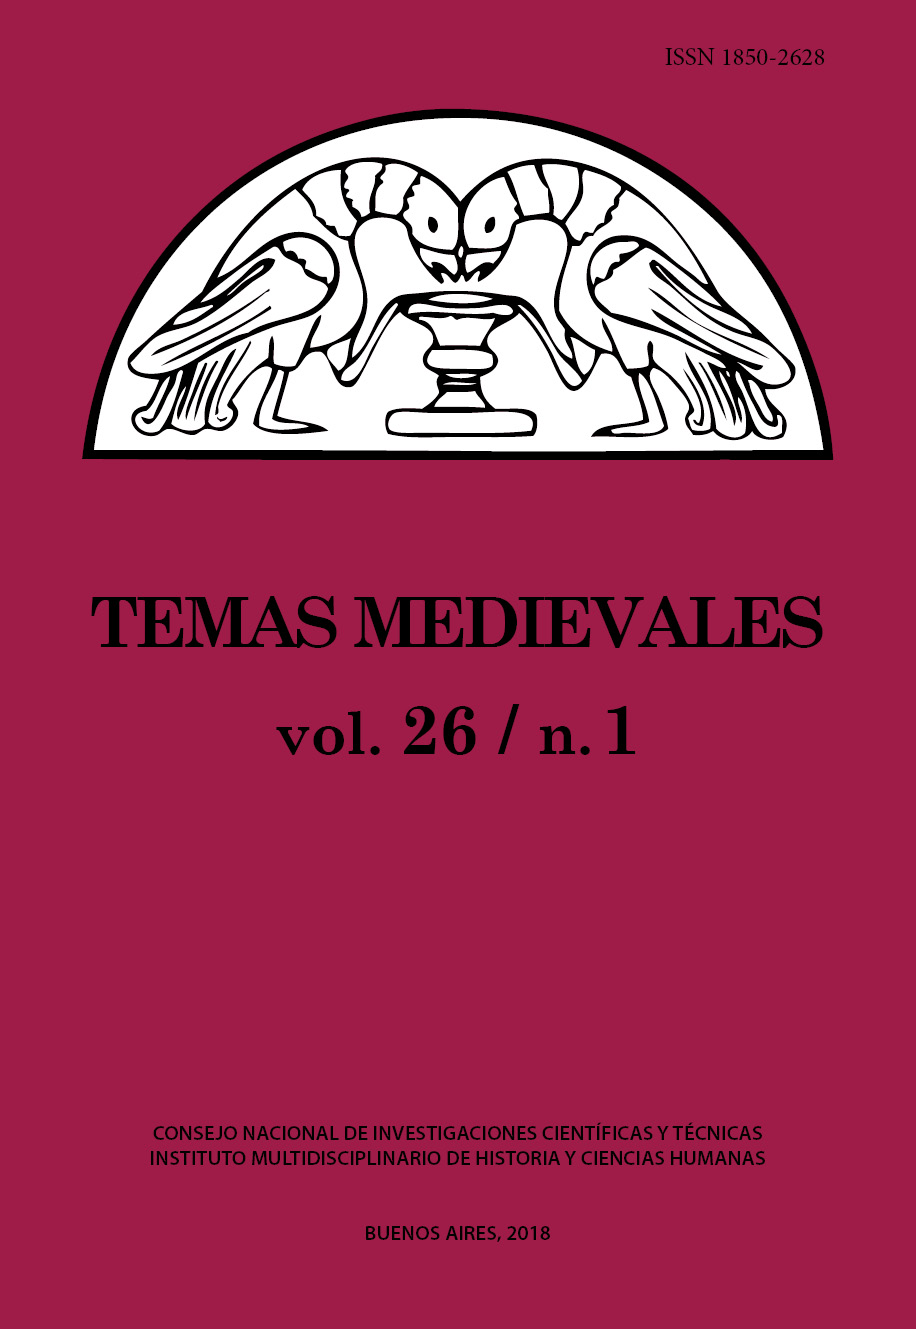 Temas Medievales vol. 26